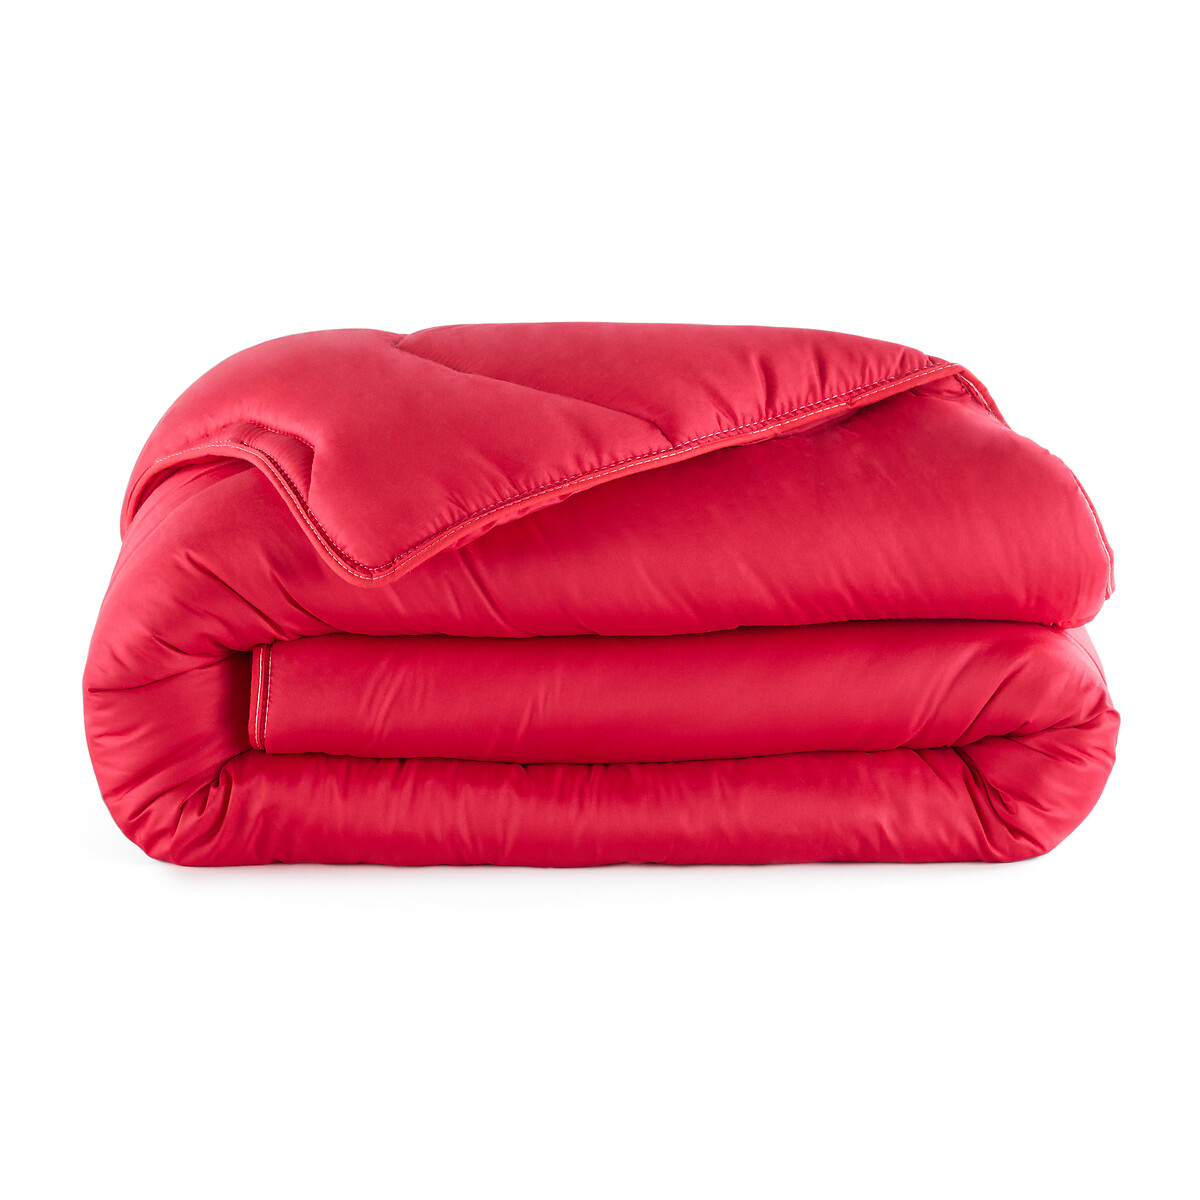 Одеяло La Redoute Из синтетики  гм 260 x 240 см красный, размер 260 x 240 см - фото 2